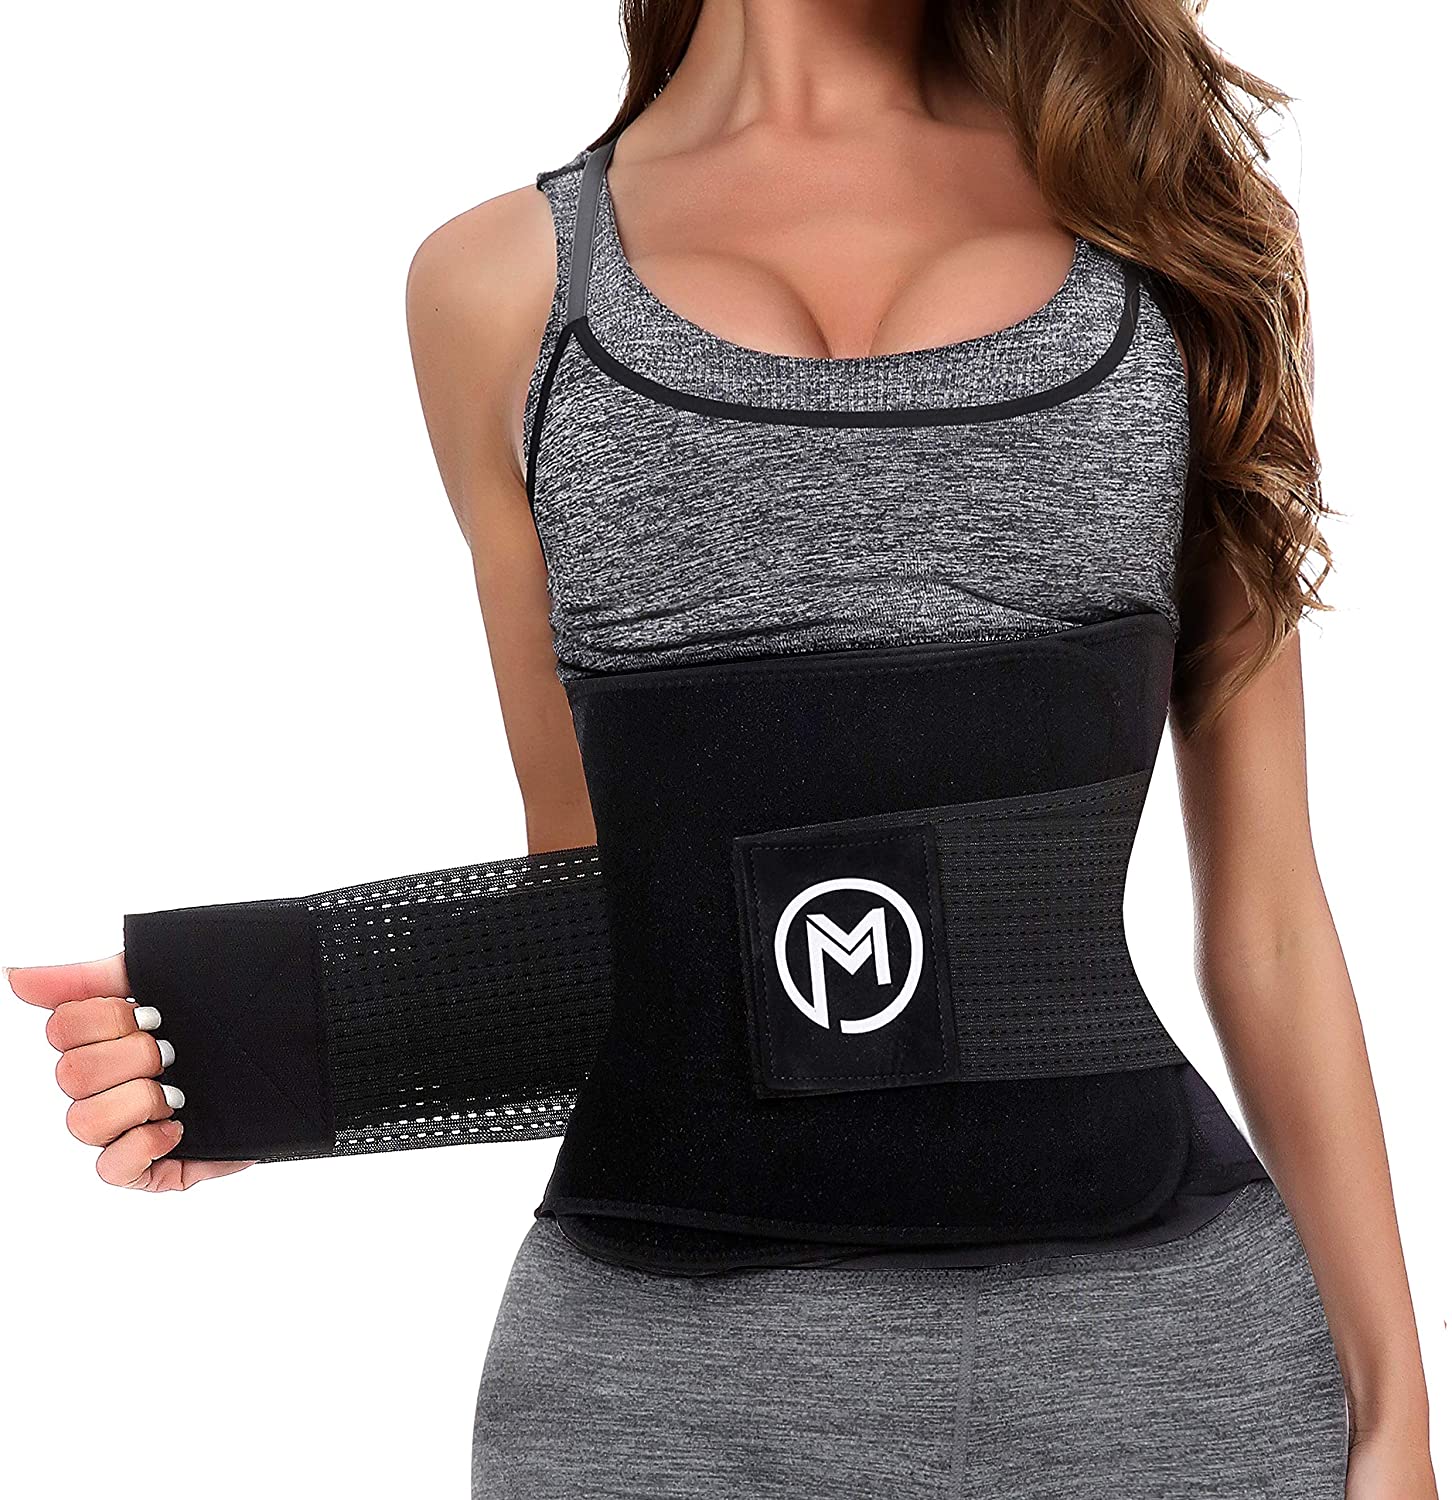 Sweat Belts For Women WholeSale - Price List, Bulk Buy at